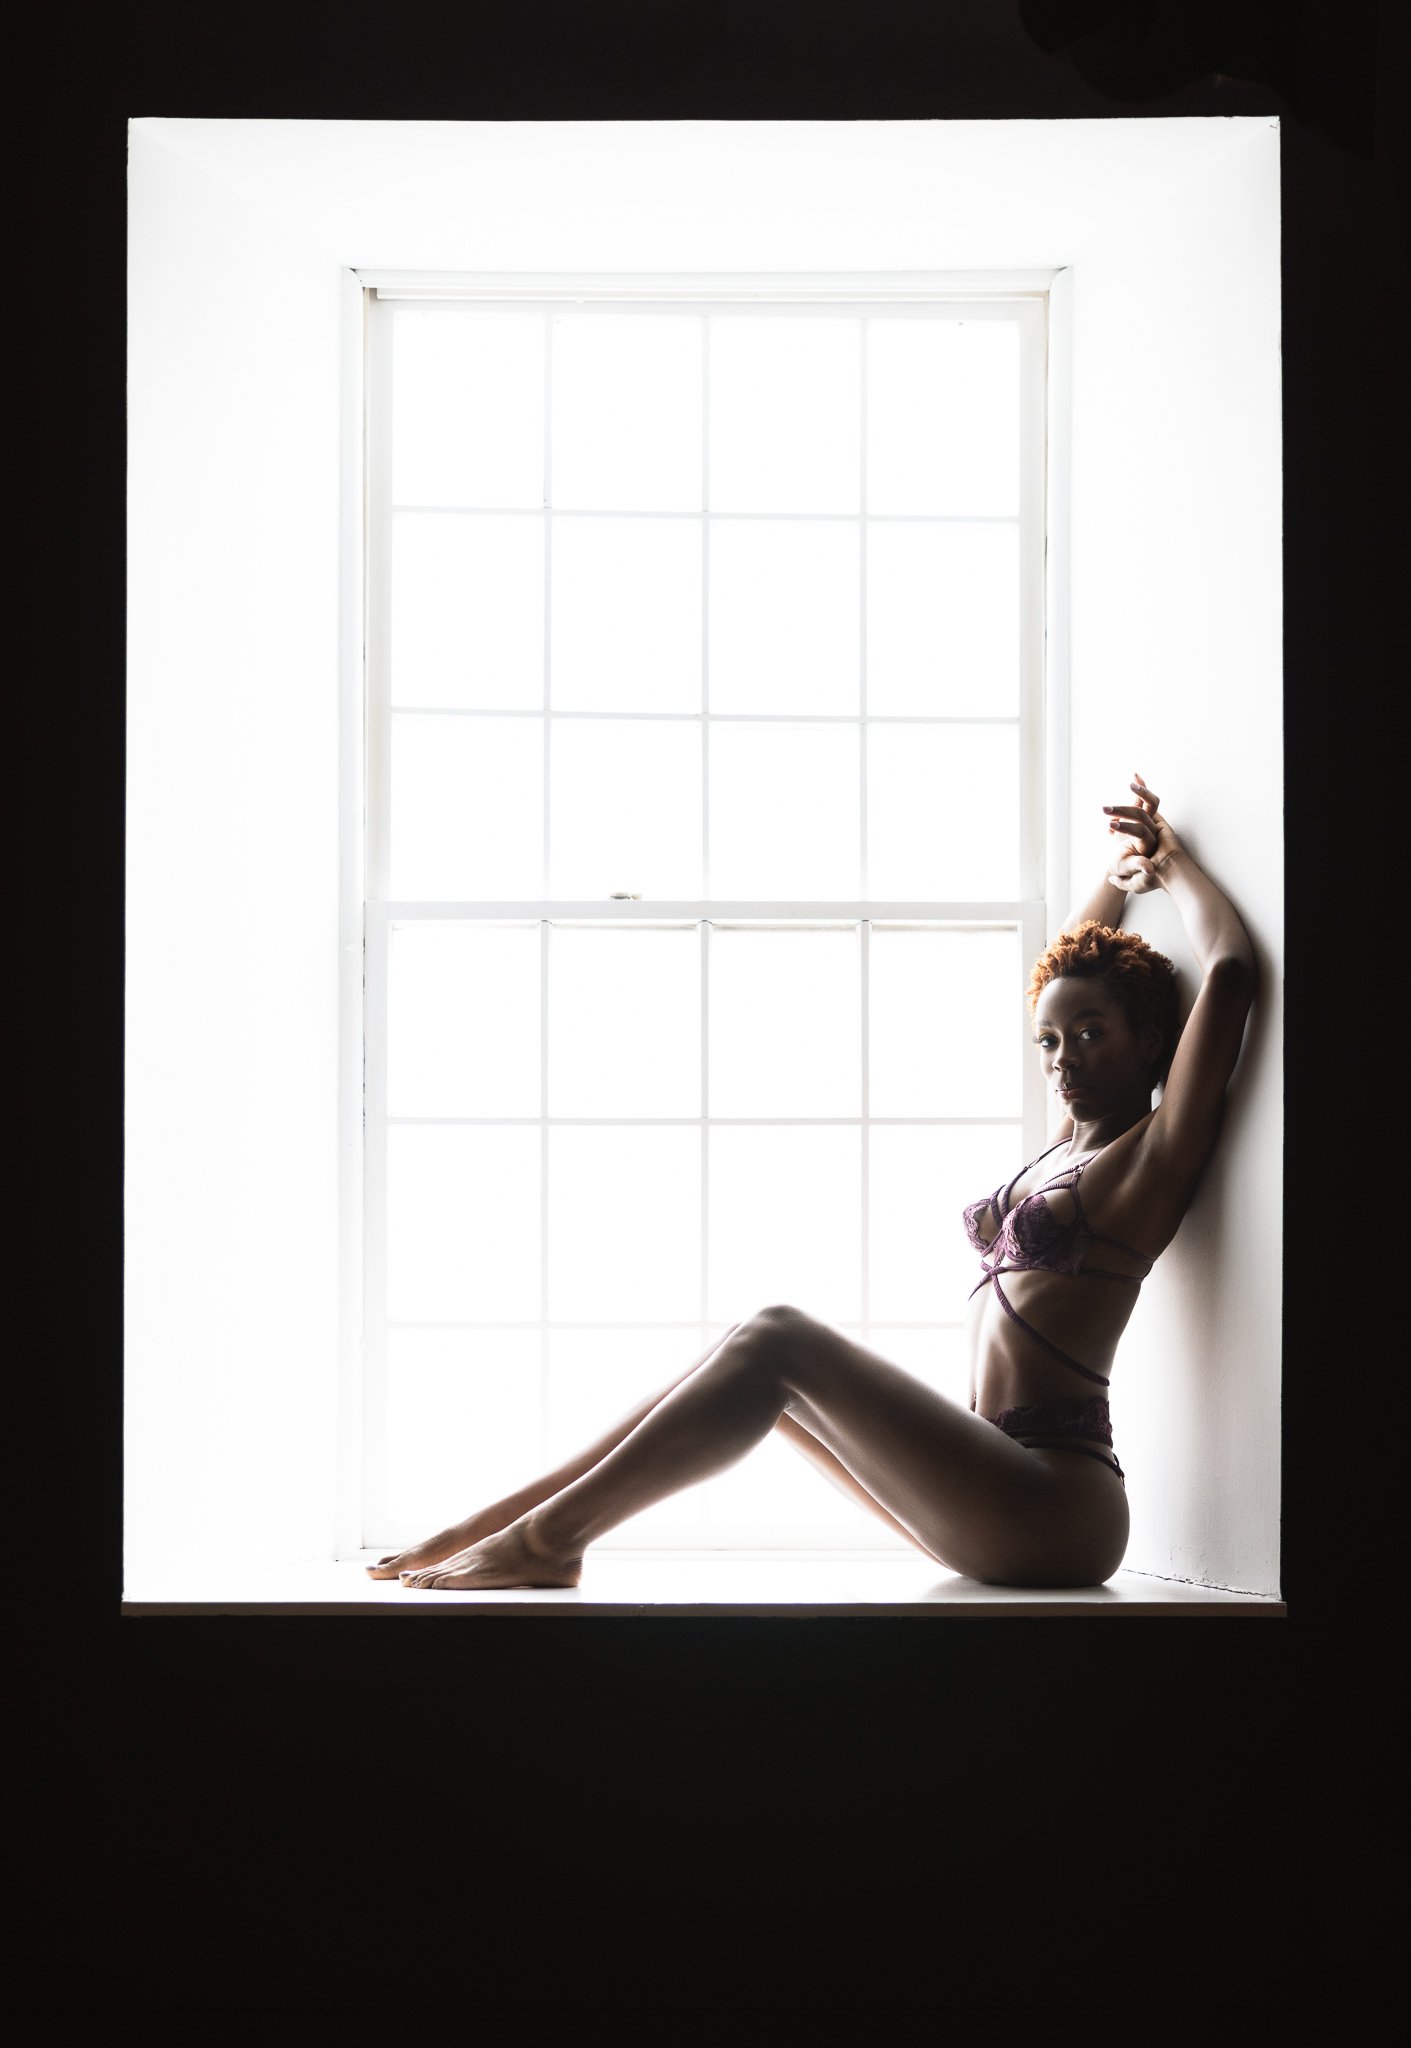 Pretty boudoir photo in a window